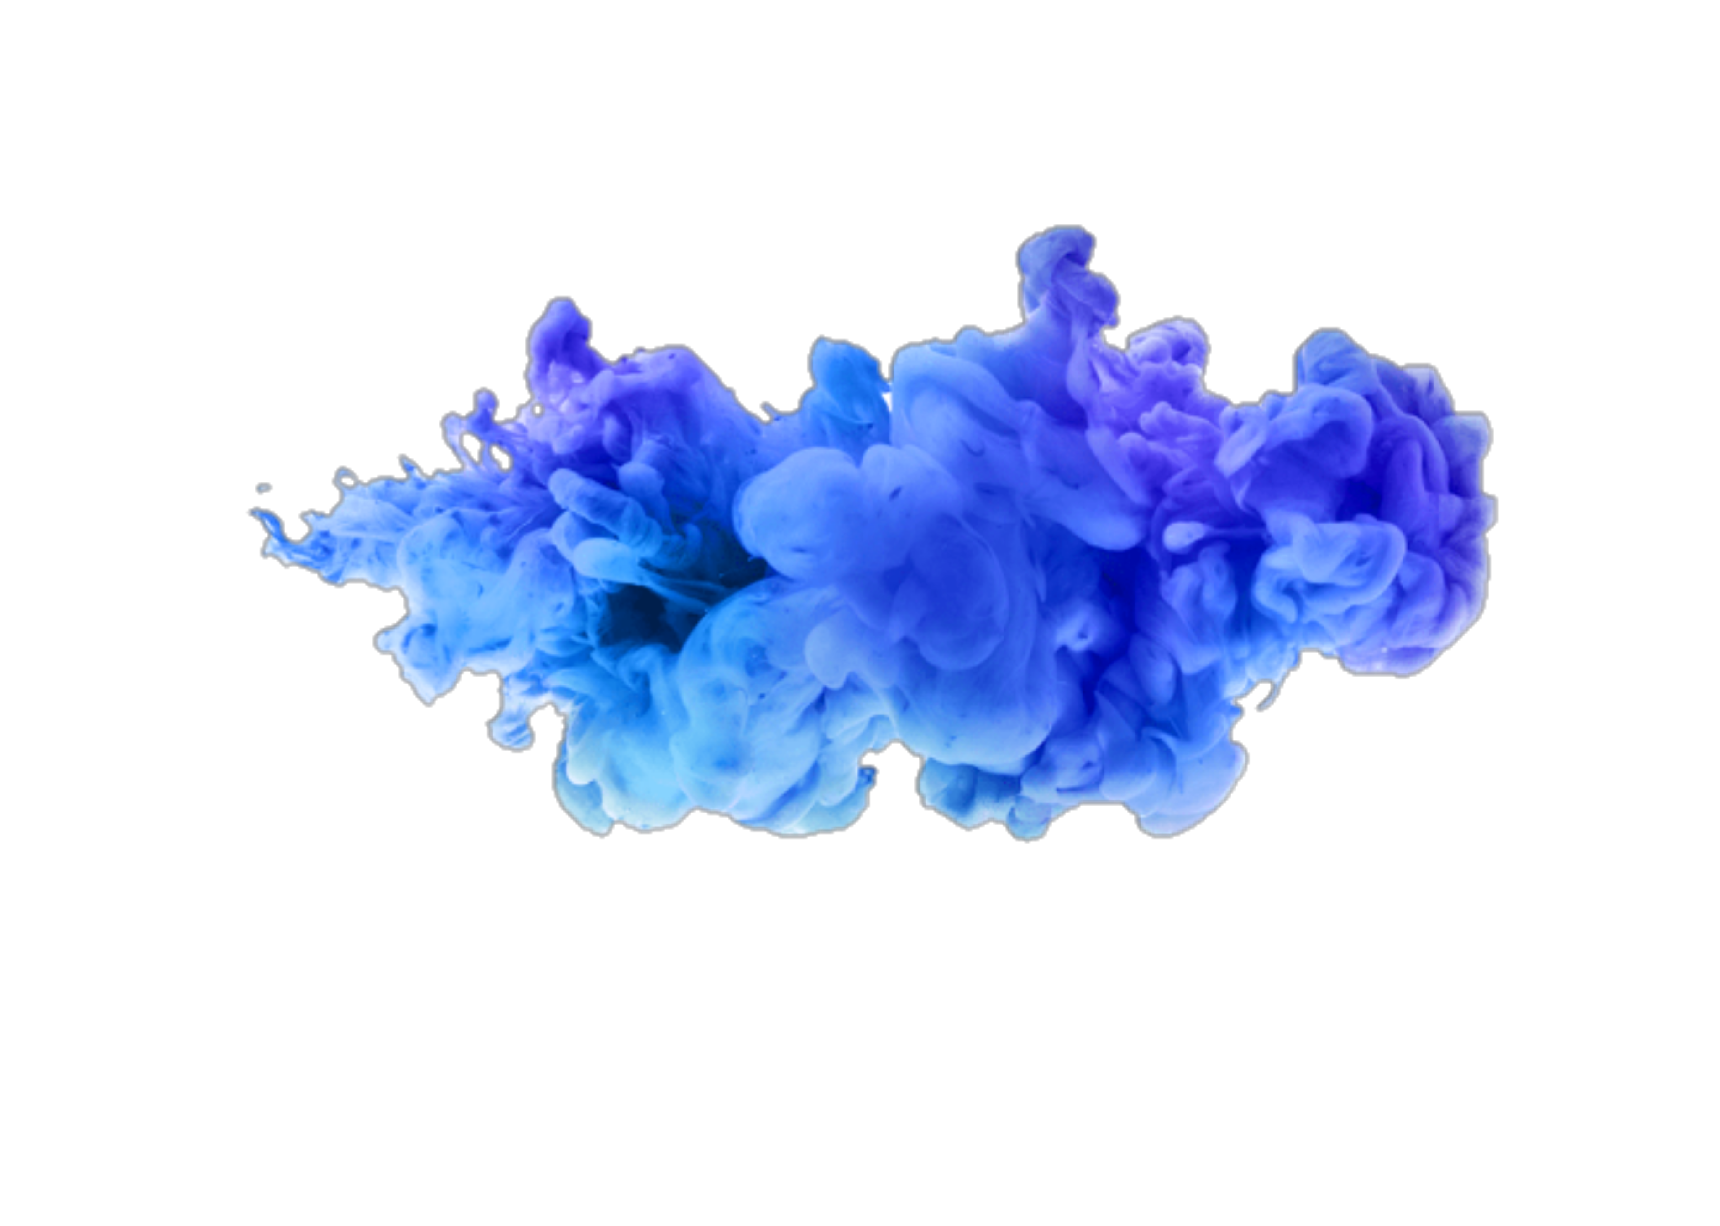 ftestickers cloud coloredclouds smoke blue purple... - 1720 x 1226 png 661kB